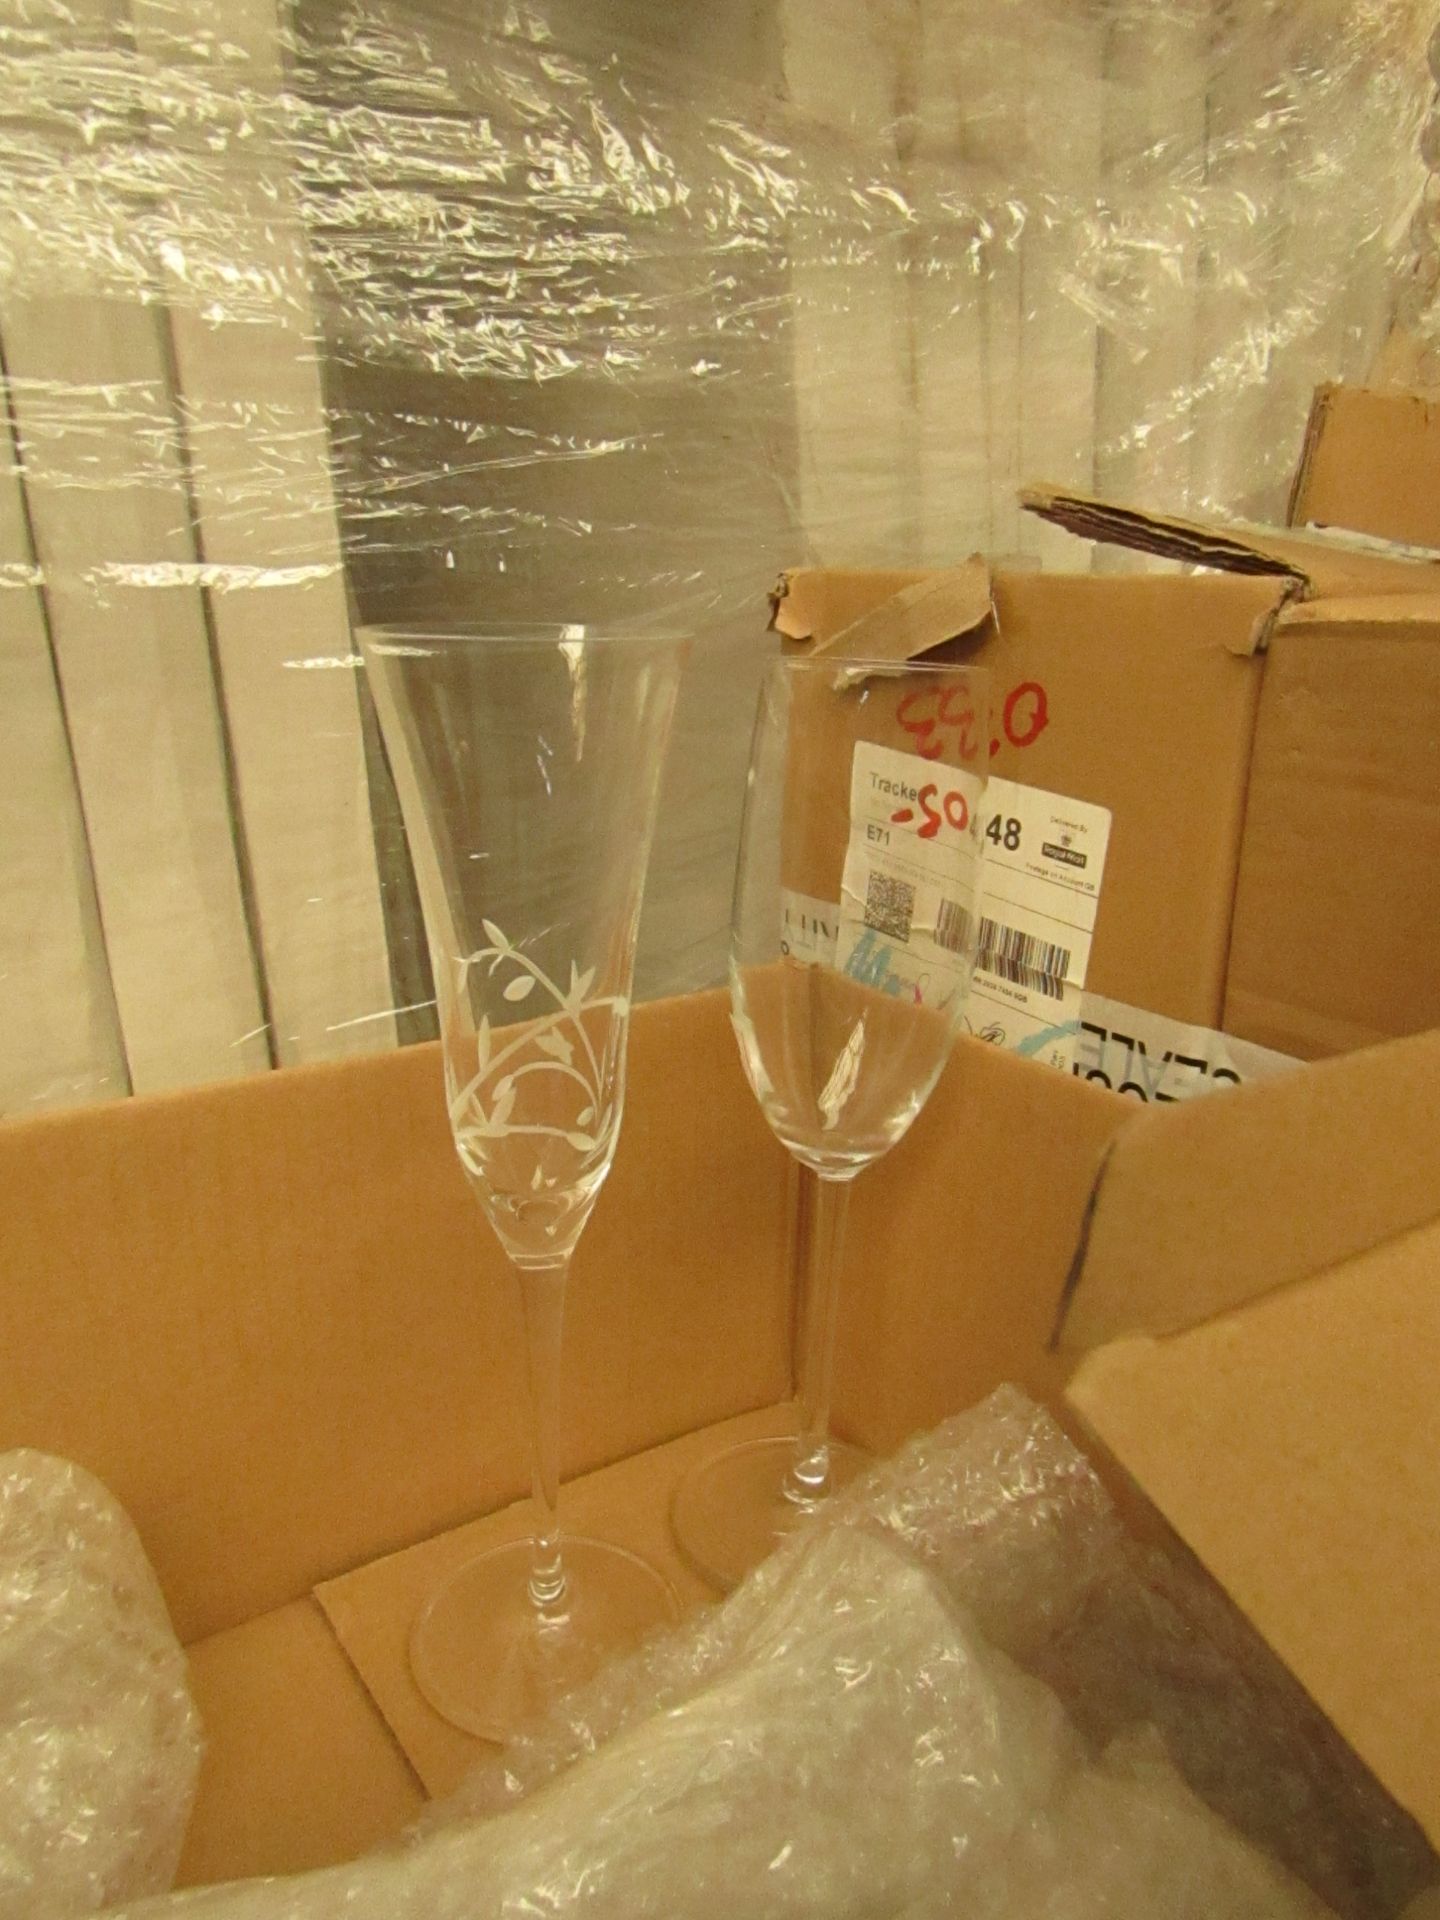 4 x Patterned wine glasses & 1 Plain champagne flute. New